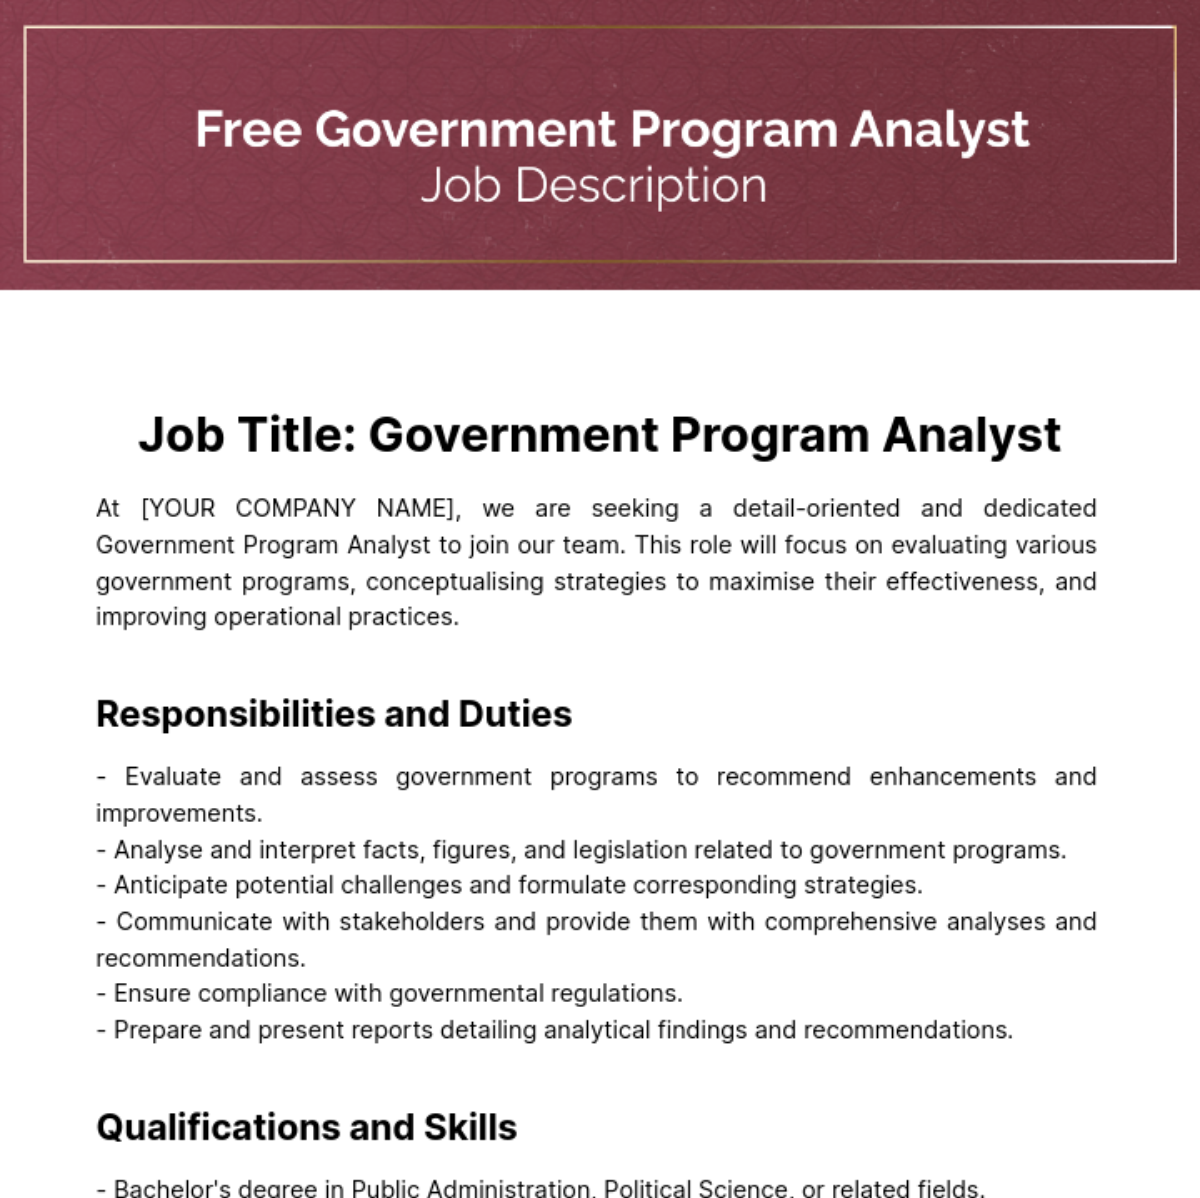 Government Program Analyst Job Description Template